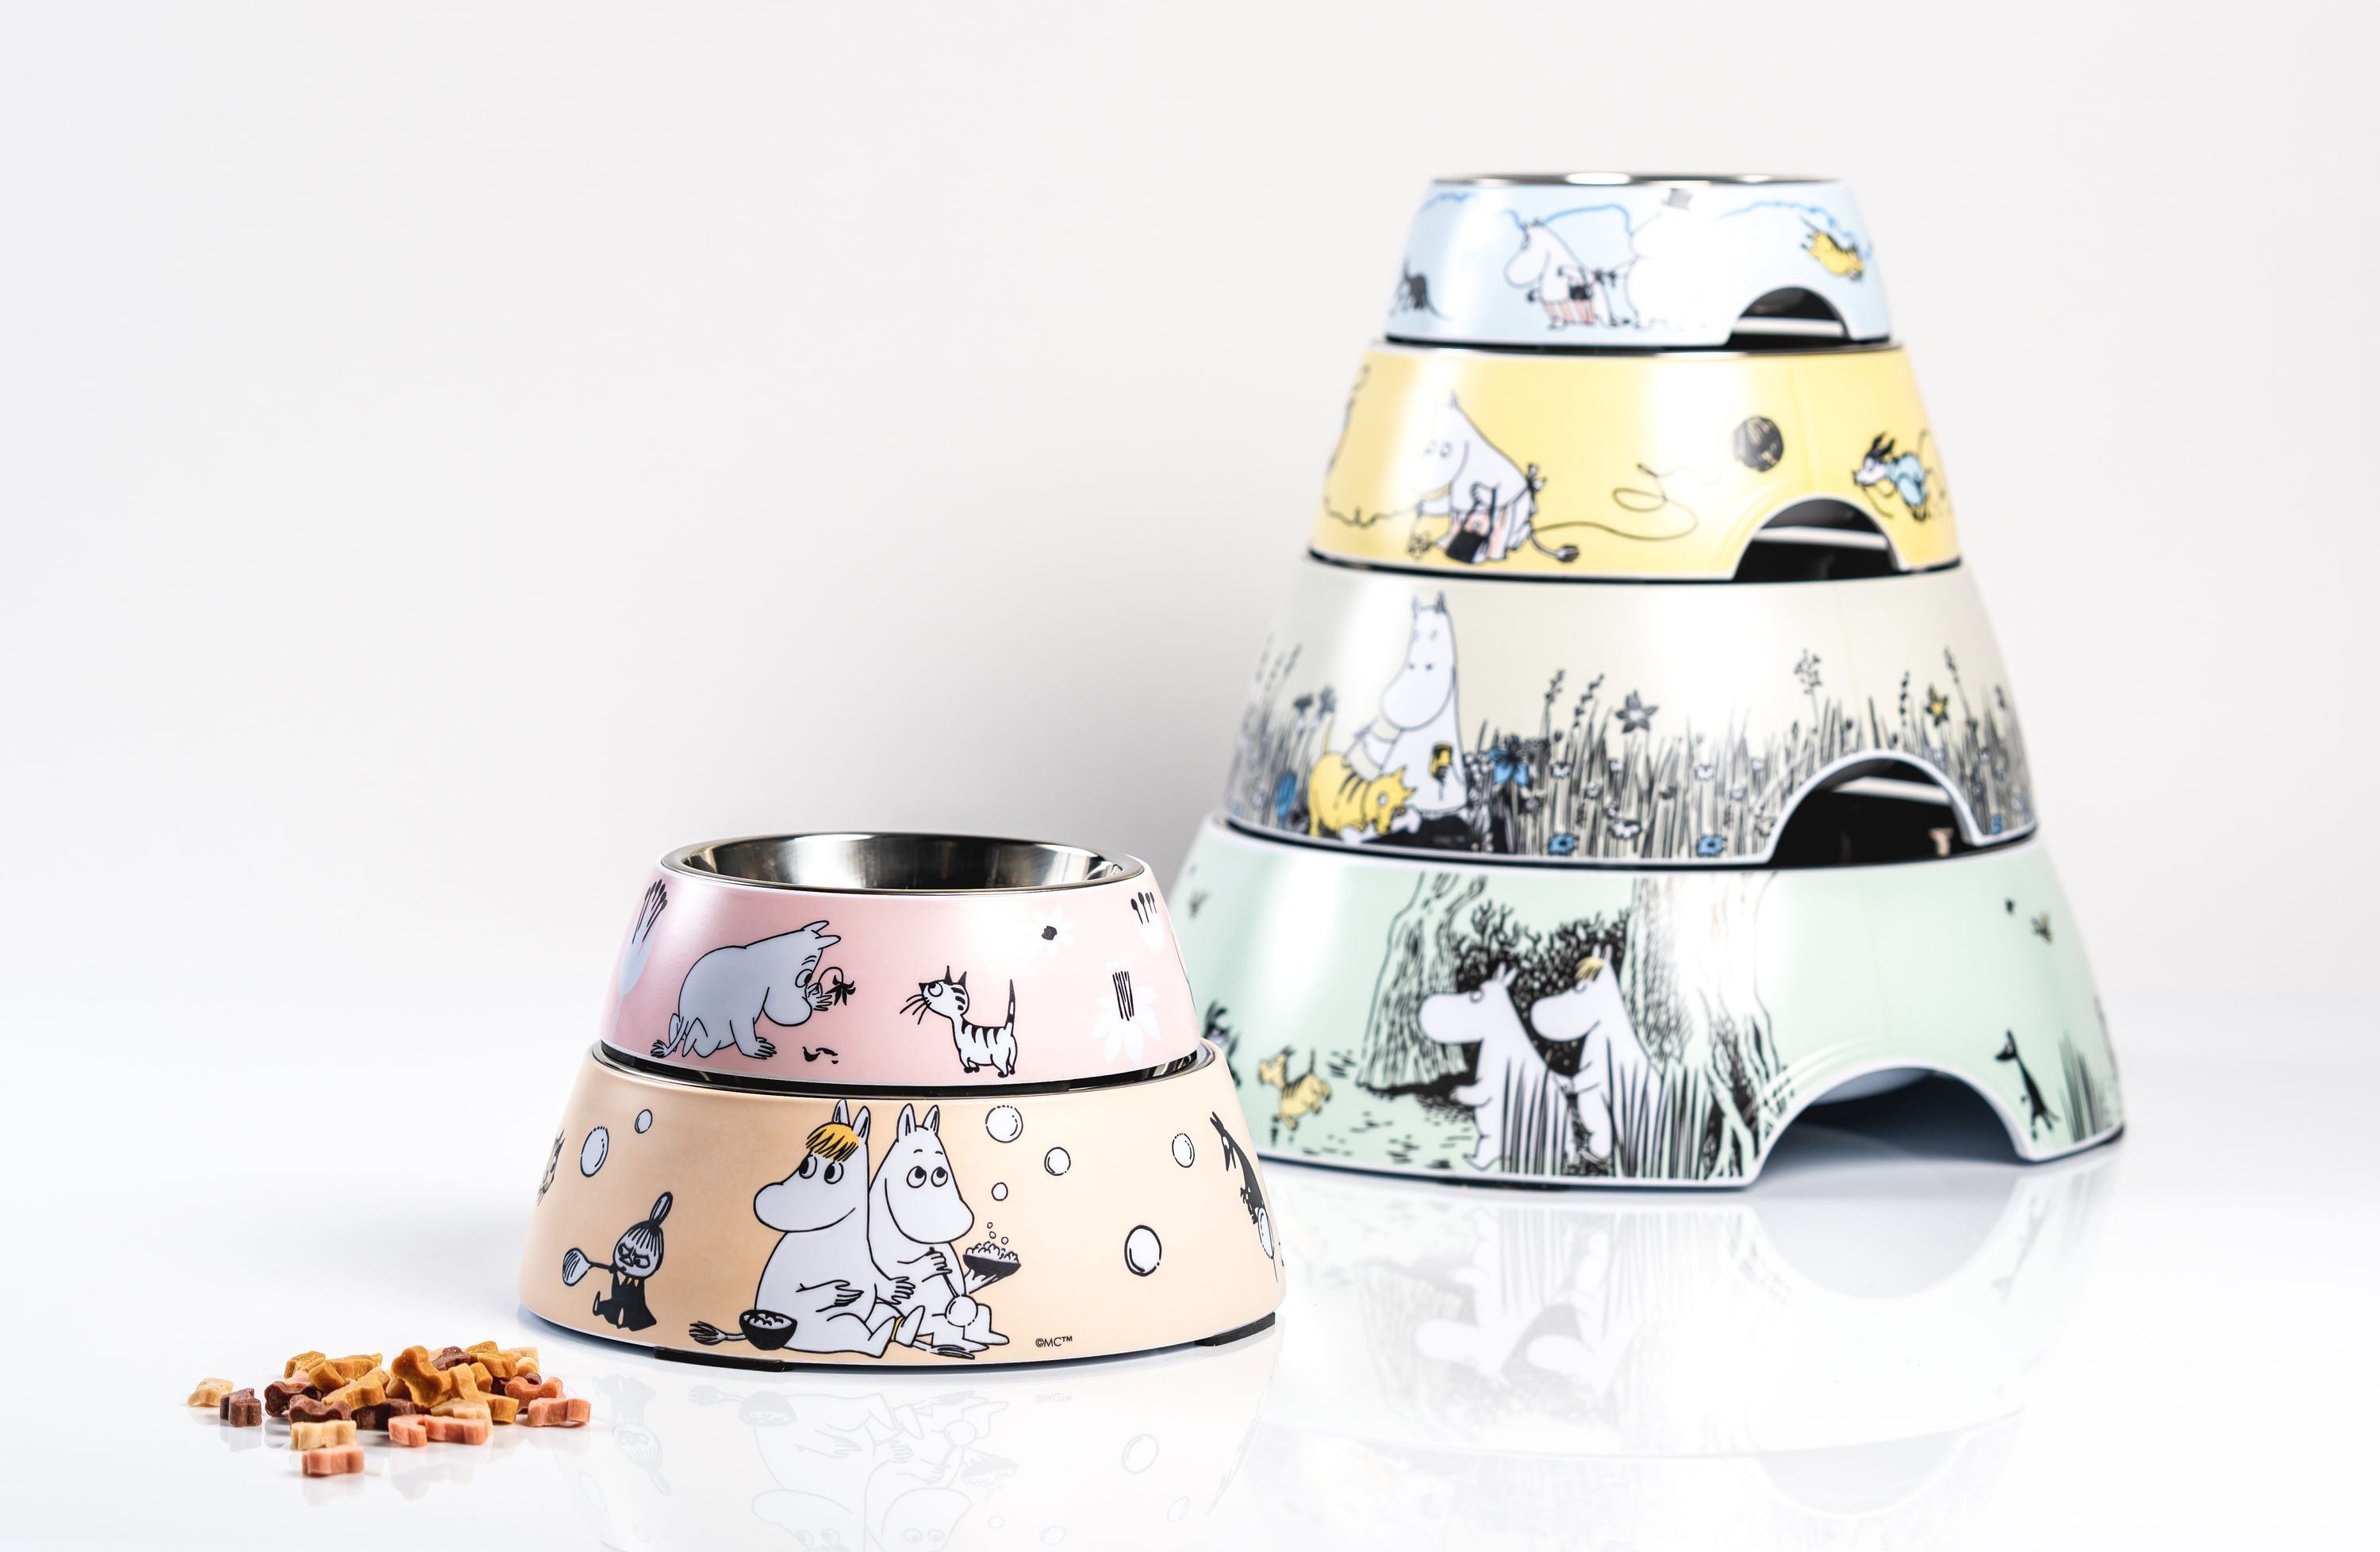 Muurla Moomin Pets Food Bowl s, rosa